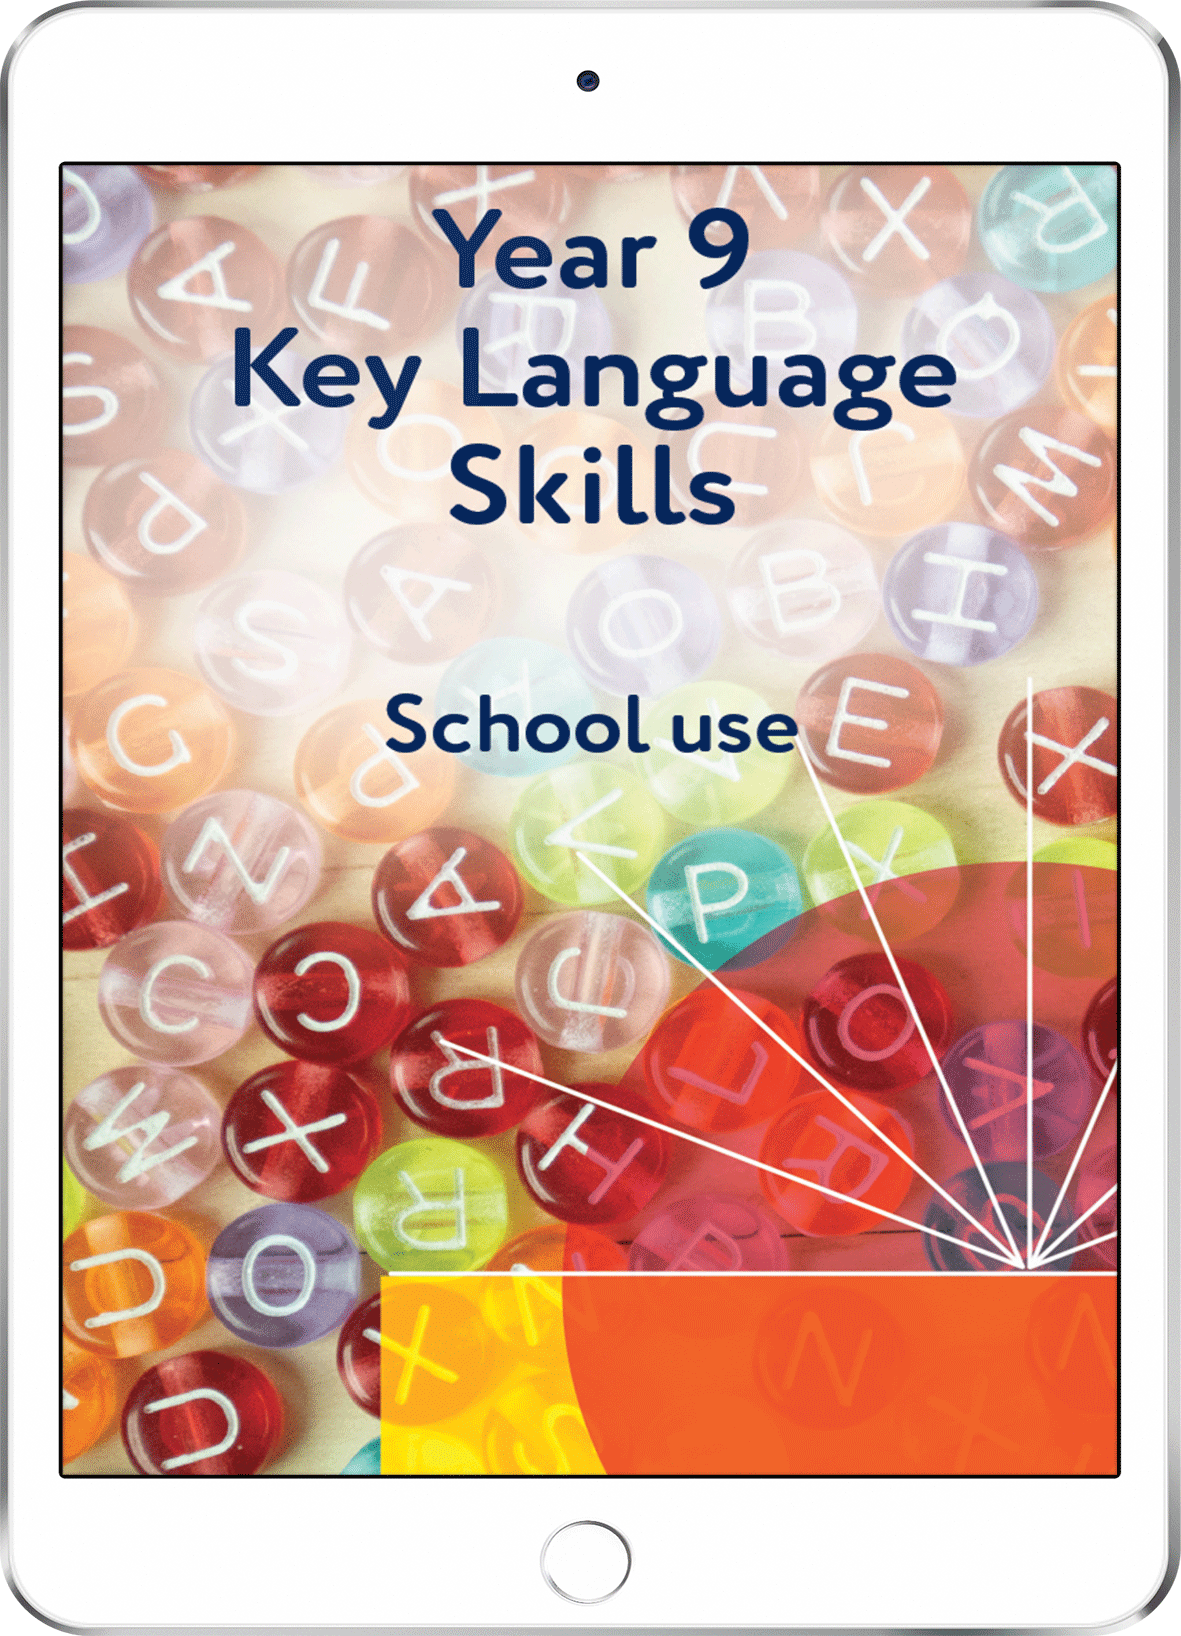 Year 9 Key Language Skills - School Use